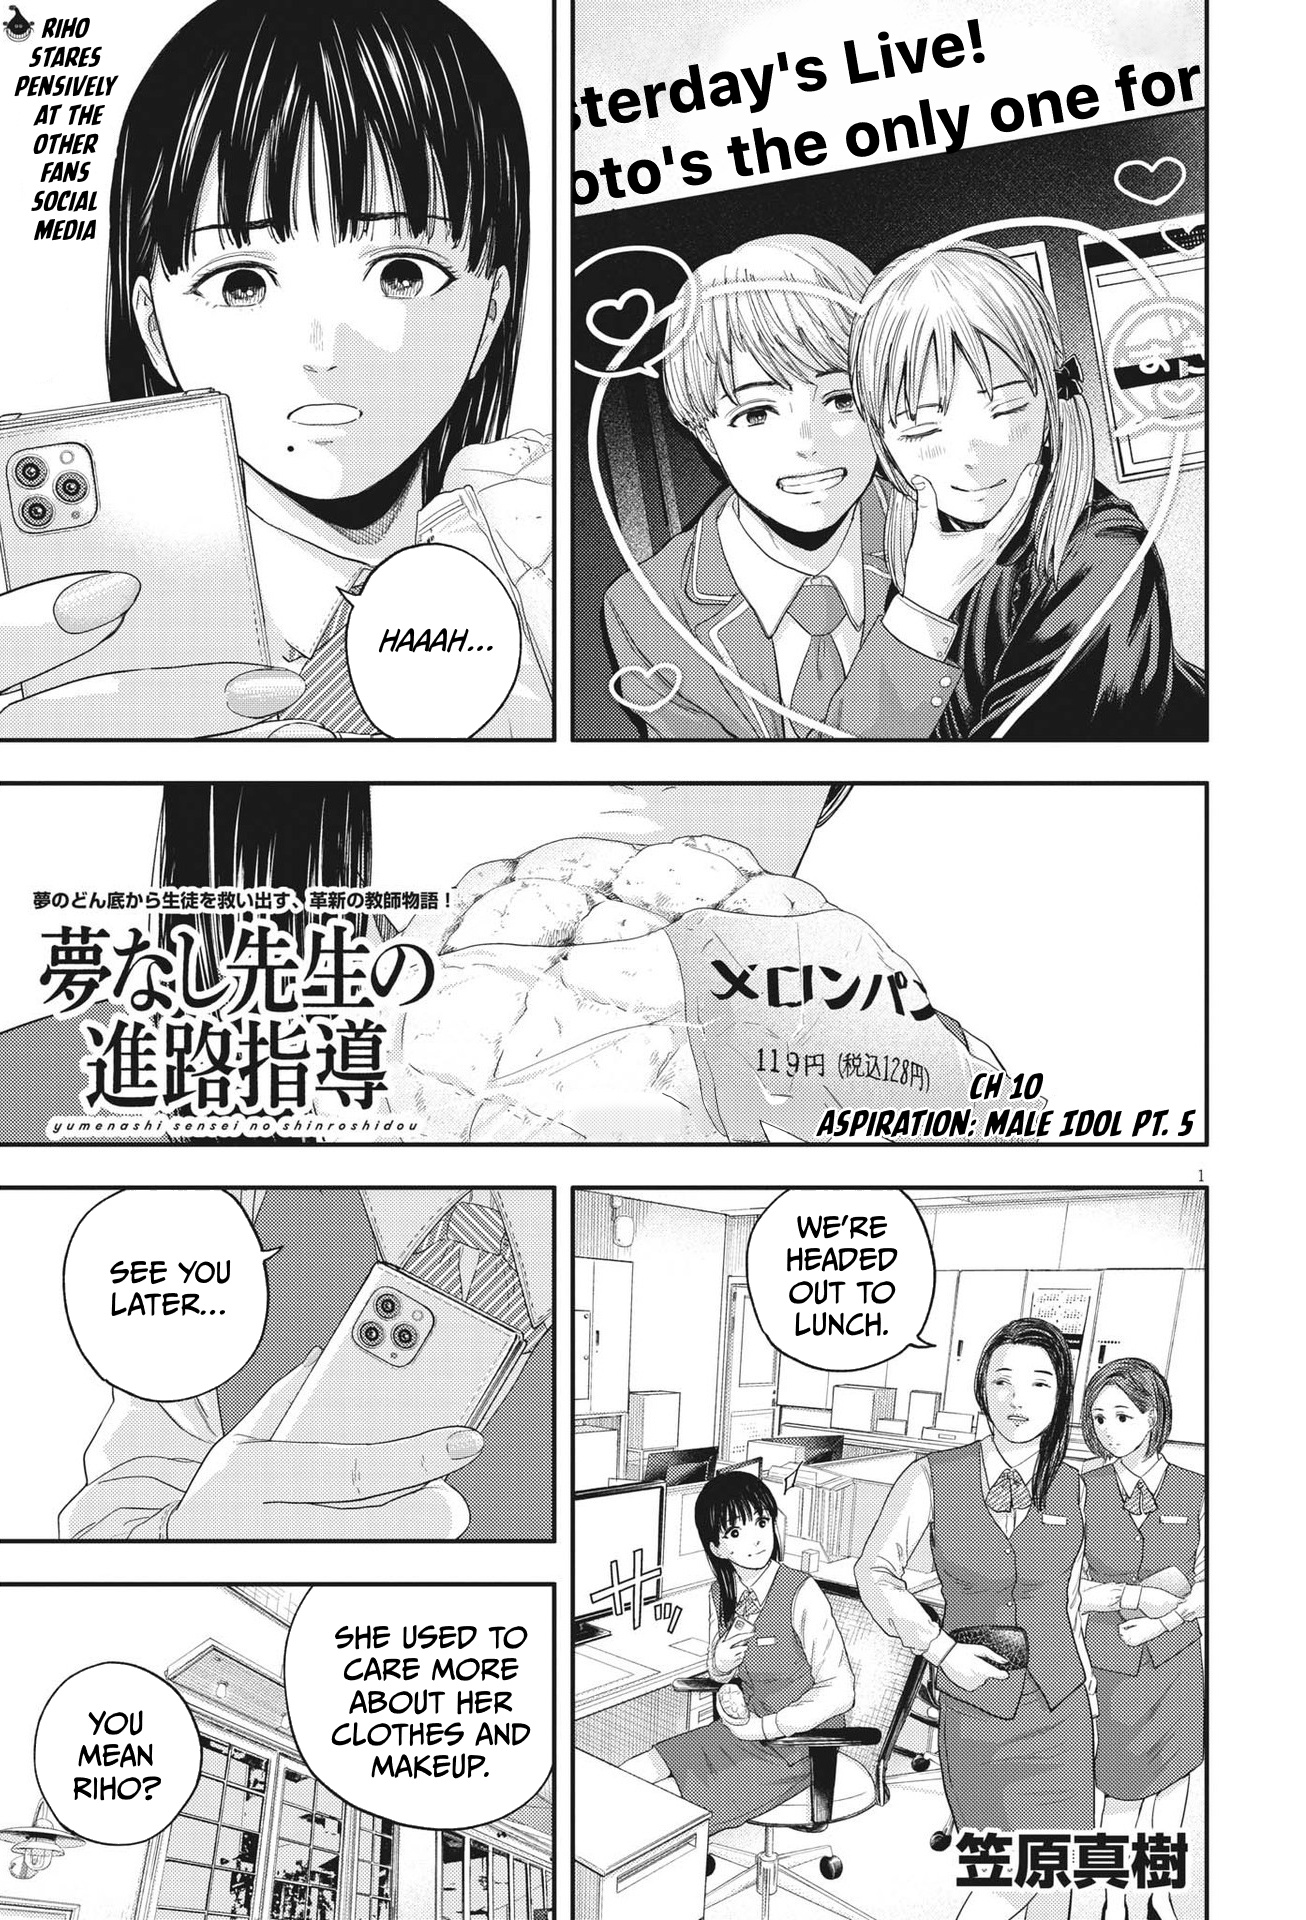 Yumenashi-Sensei No Shinroshidou Vol.2 Chapter 10: Aspiration: Male Idol Part 5 - Picture 1